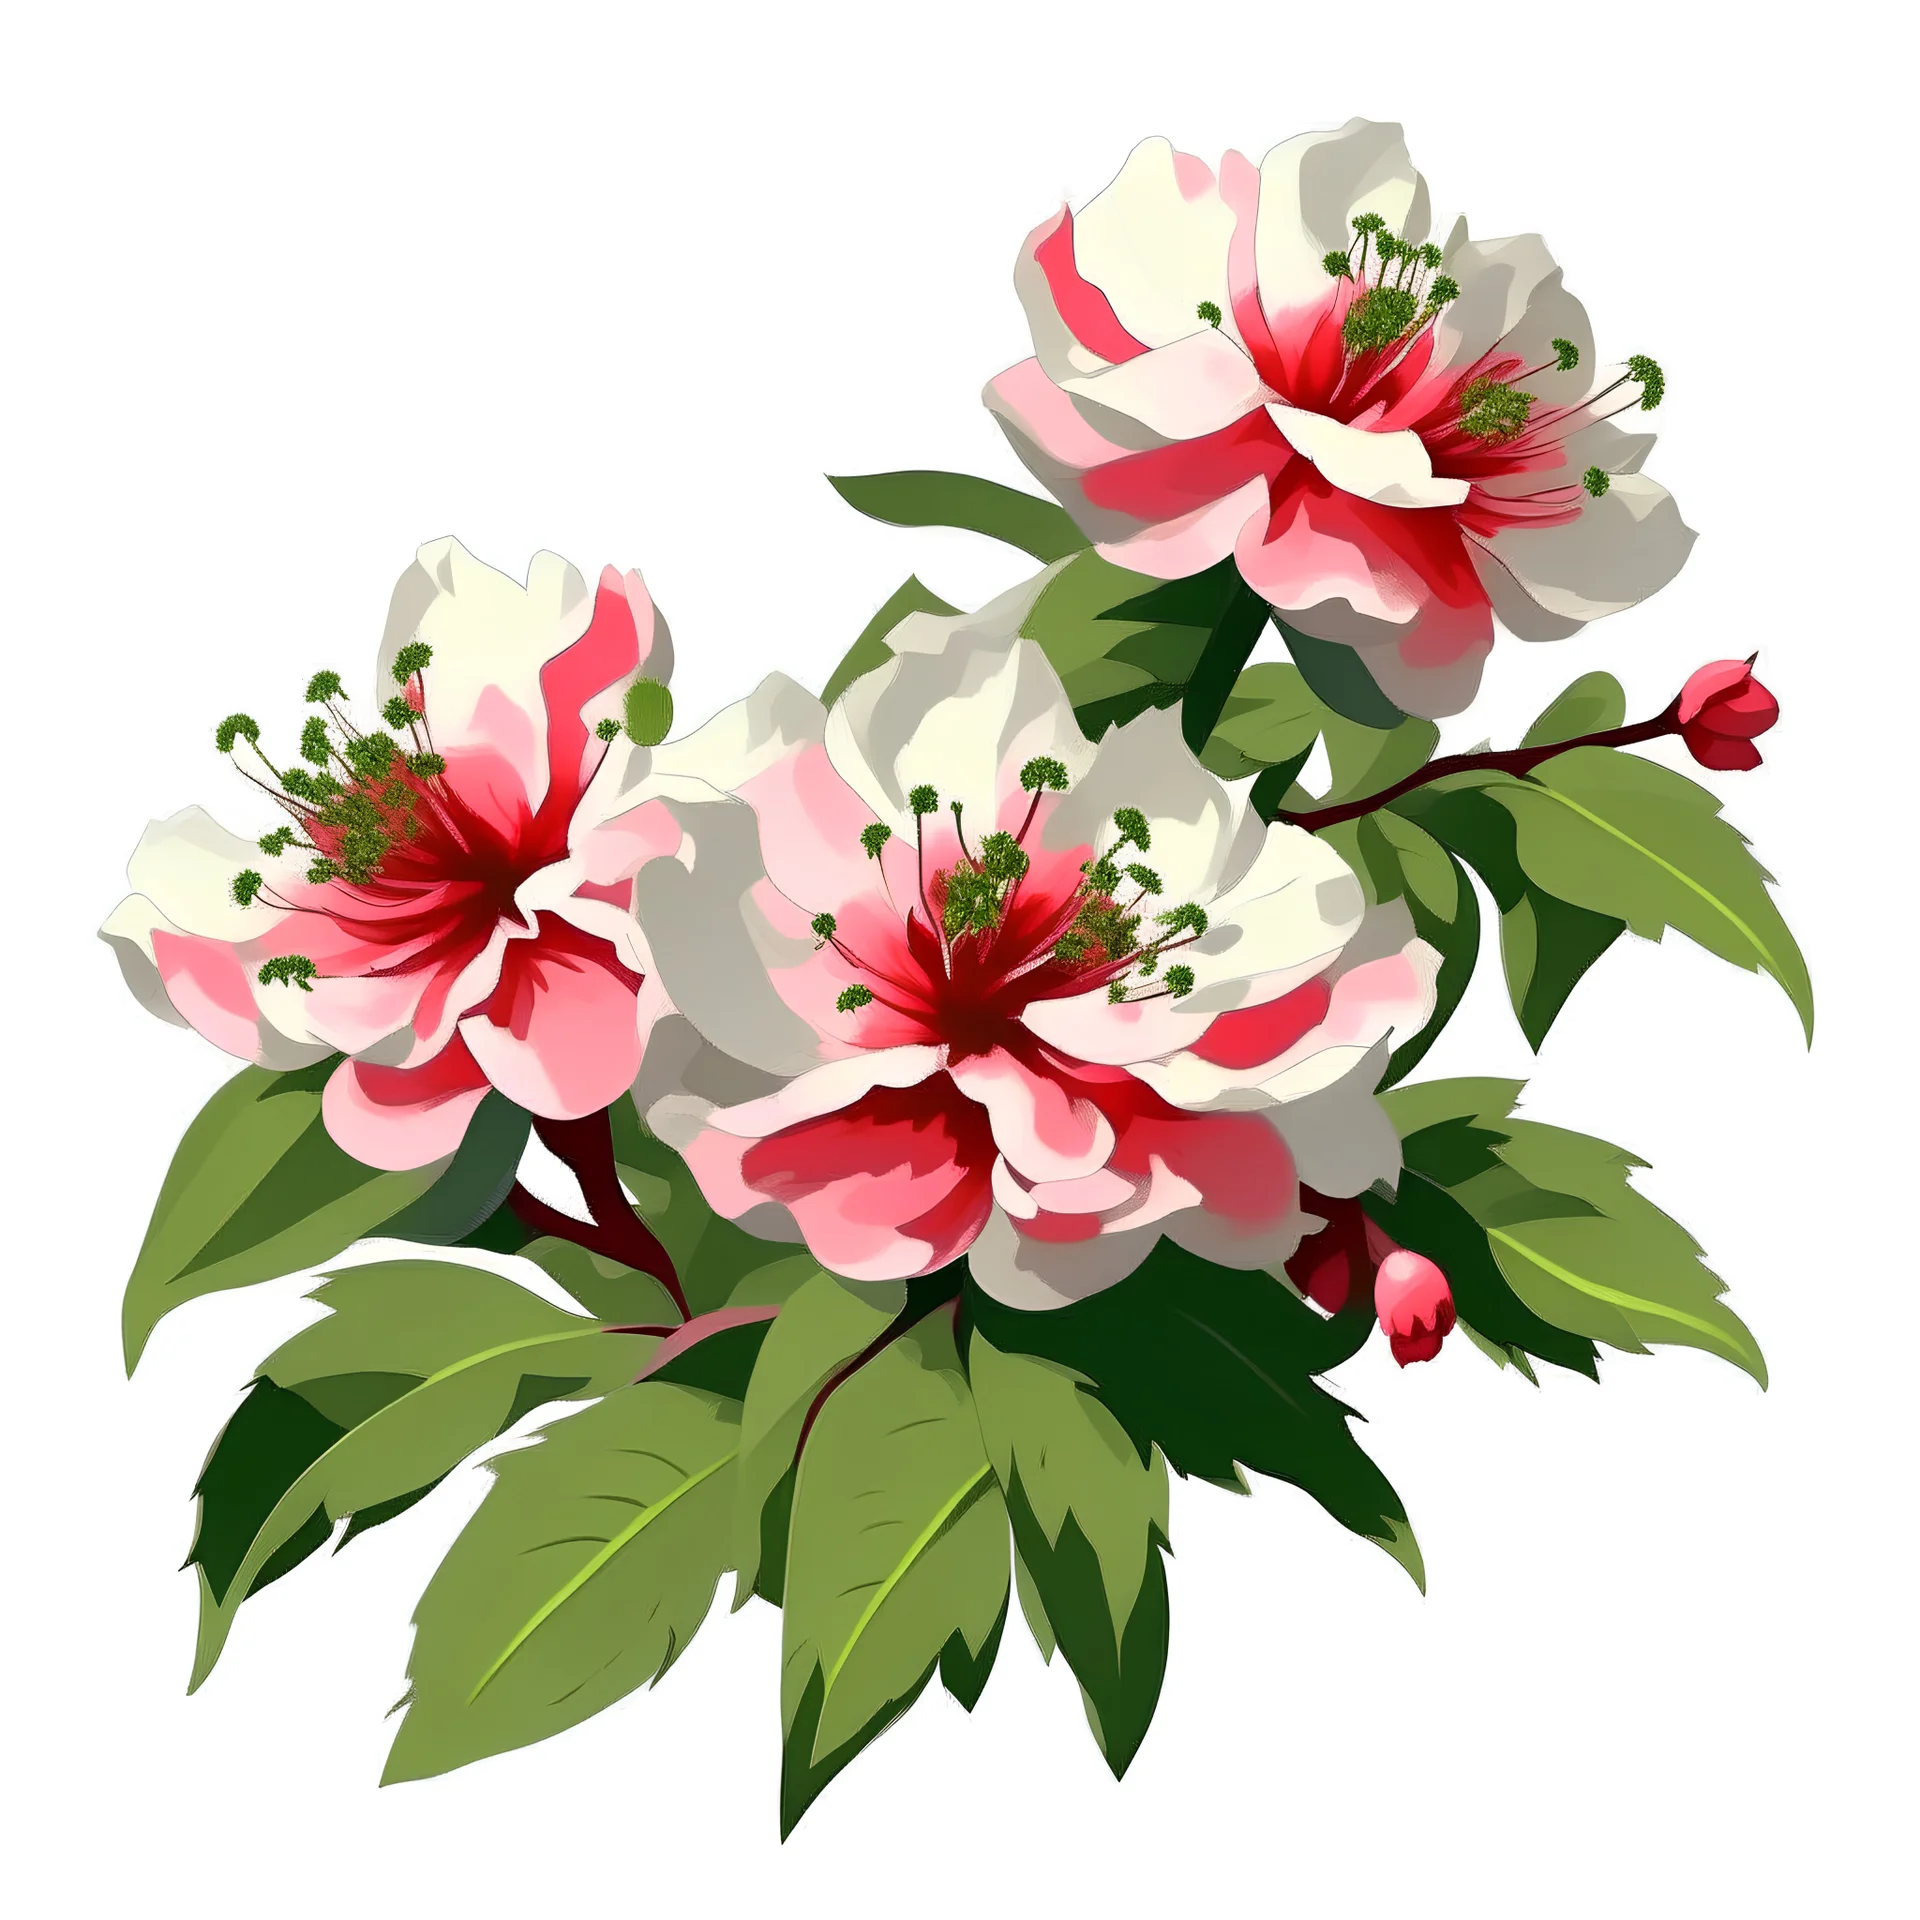 rhododendron vector